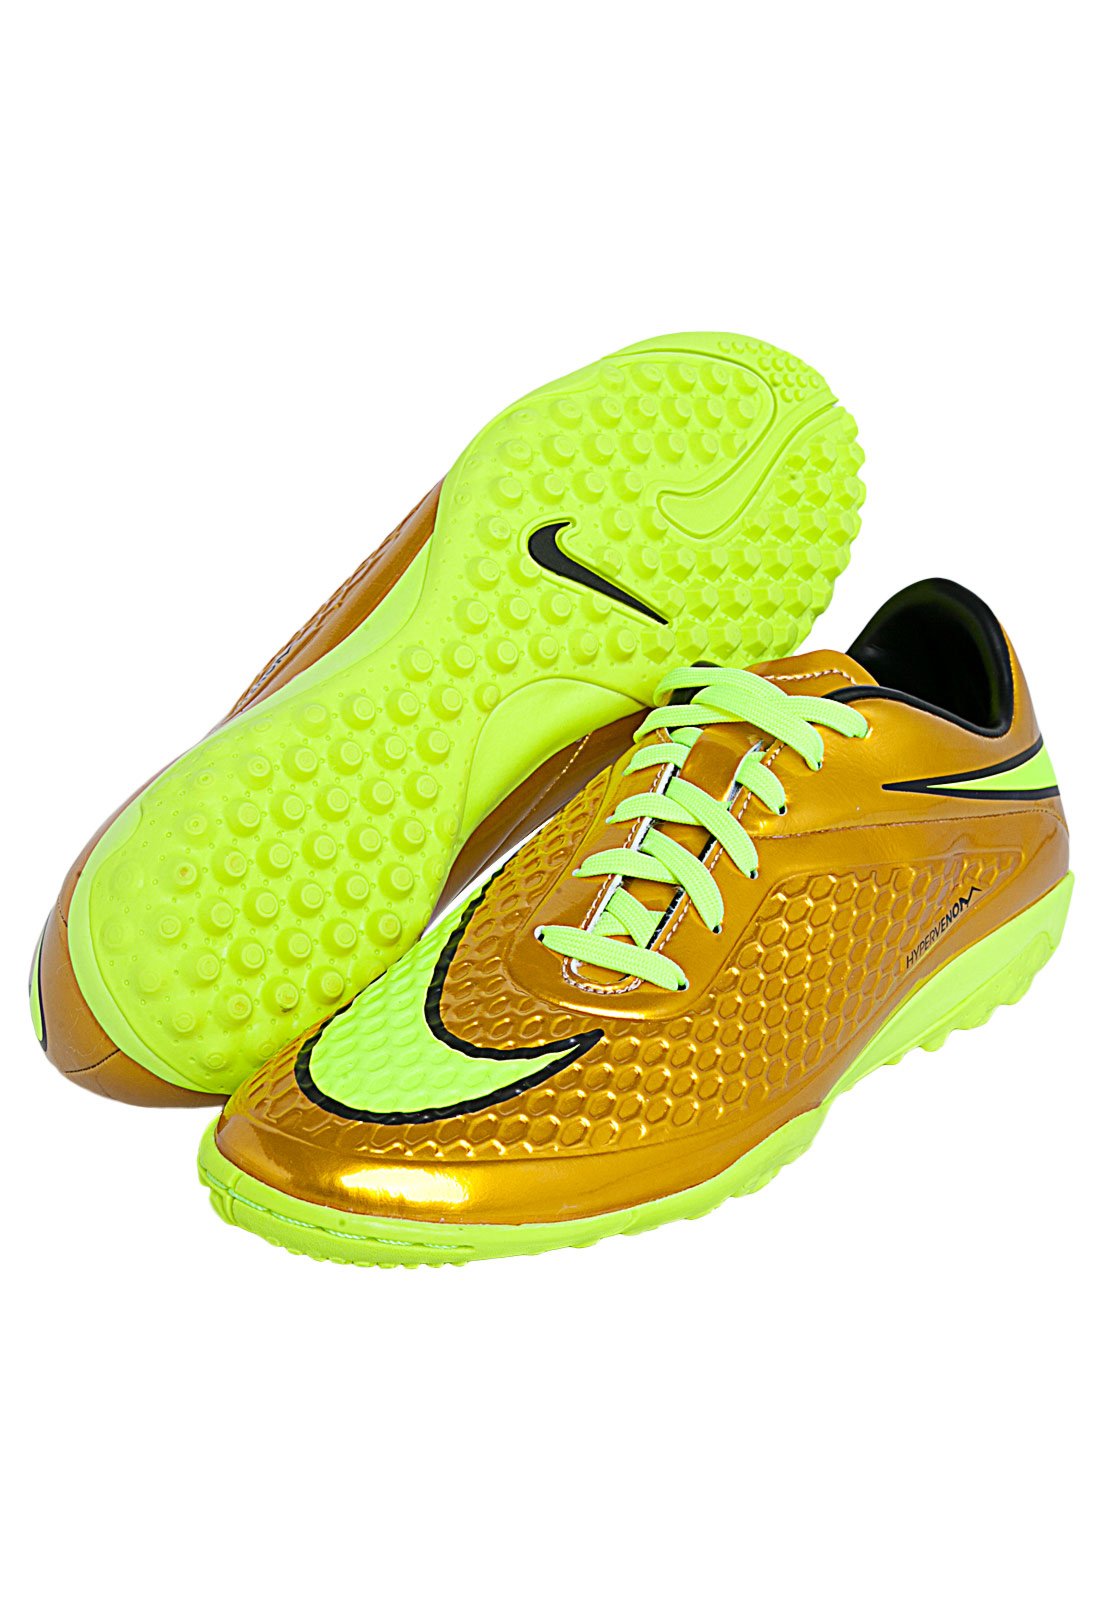 Nike Kids HypervenomX Phelon III Dynamic Fit IC Soccer Shoe (Little